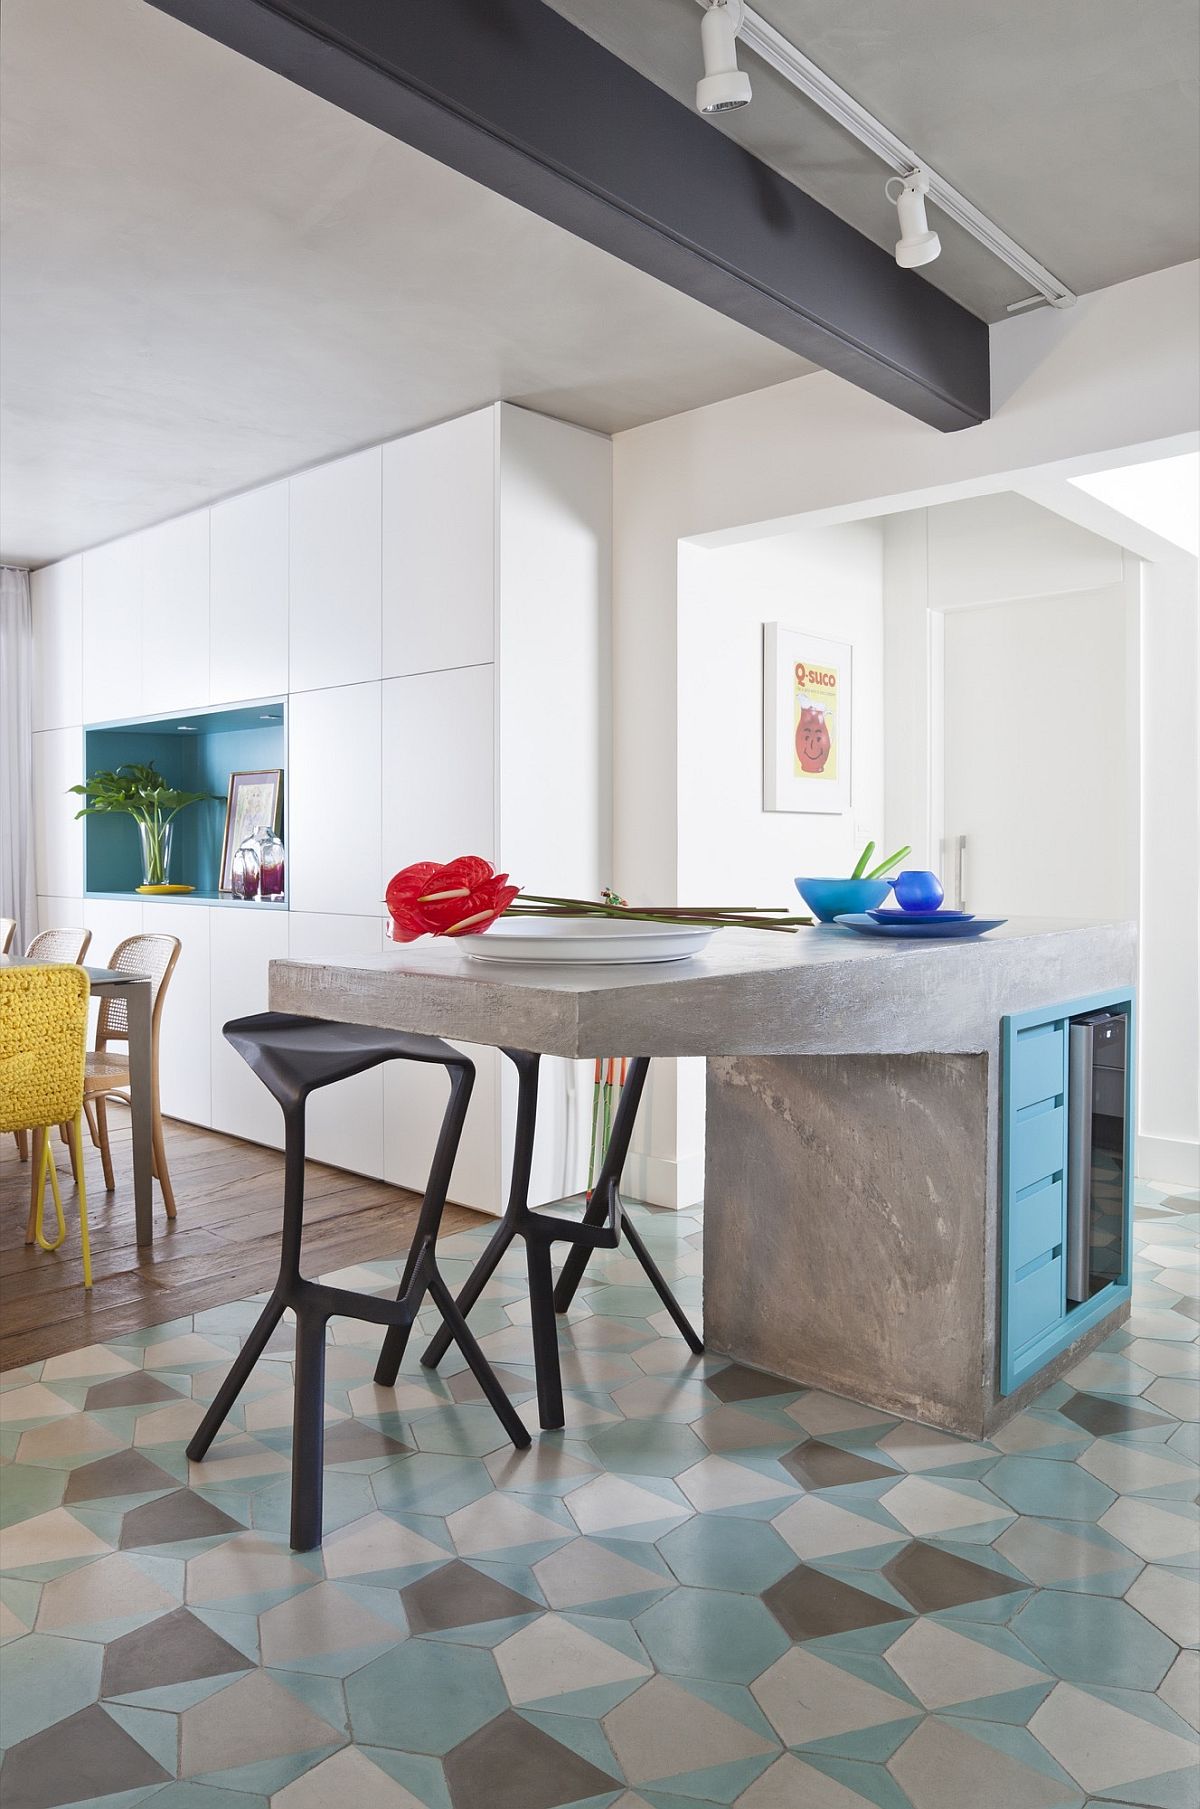 Super cool cement kitchen island along with hexagonal floor tiles